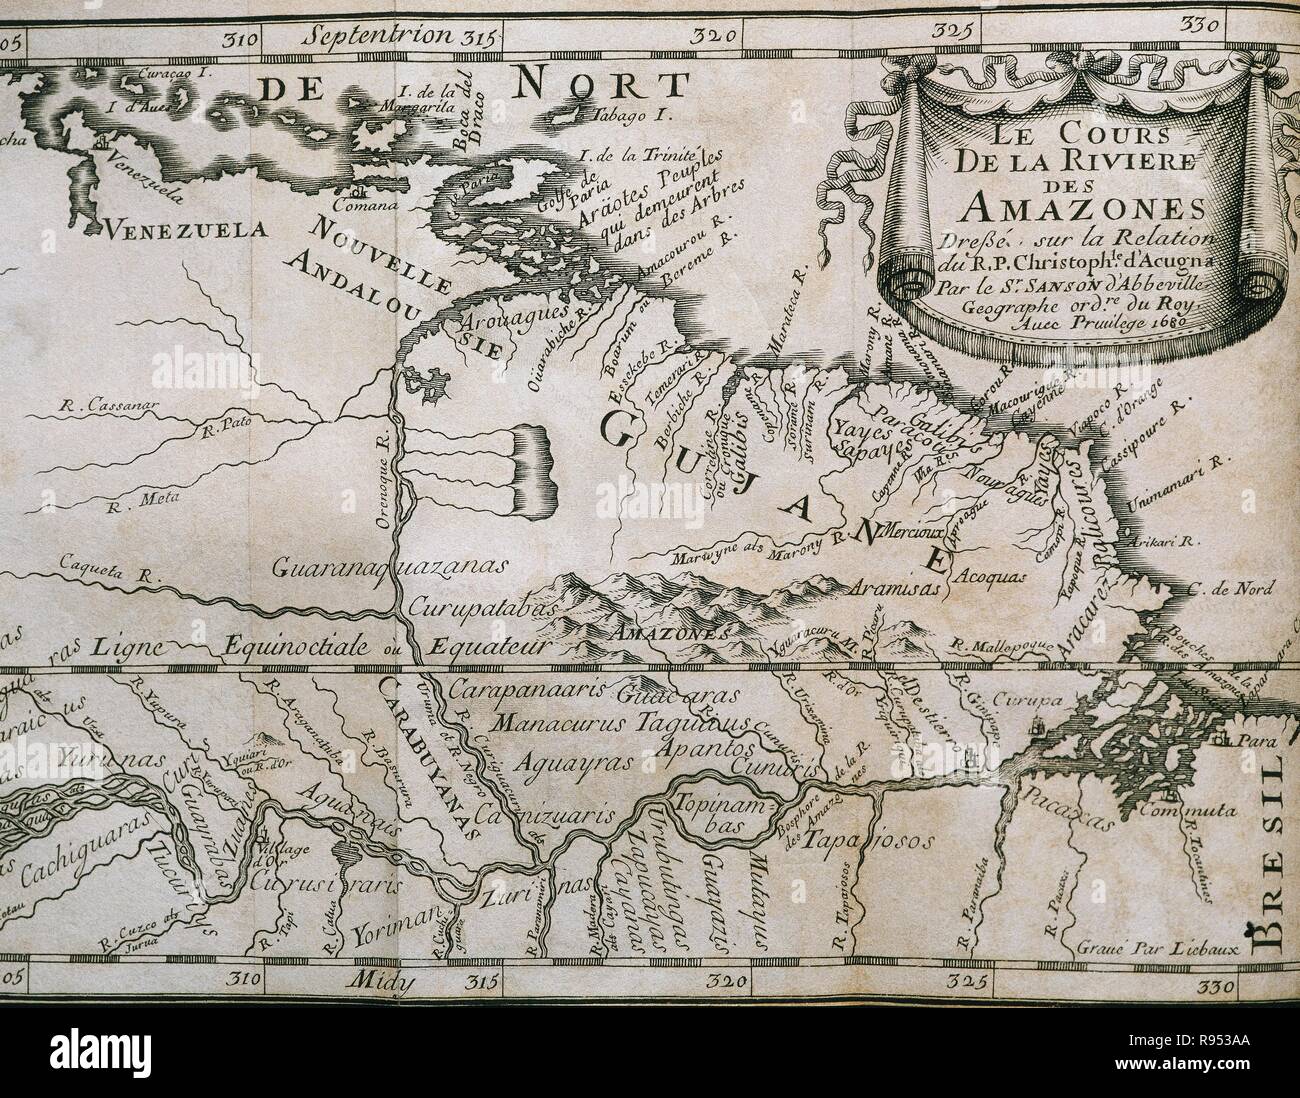 Map of the Amazon area of Guiana. It belongs to the work 'Relation de la Riviere des Amazones', Paris, 1680. Written by Cristobal de Acuna (1597-1676), Spanish Jesuit missionary. Engraving. Stock Photo